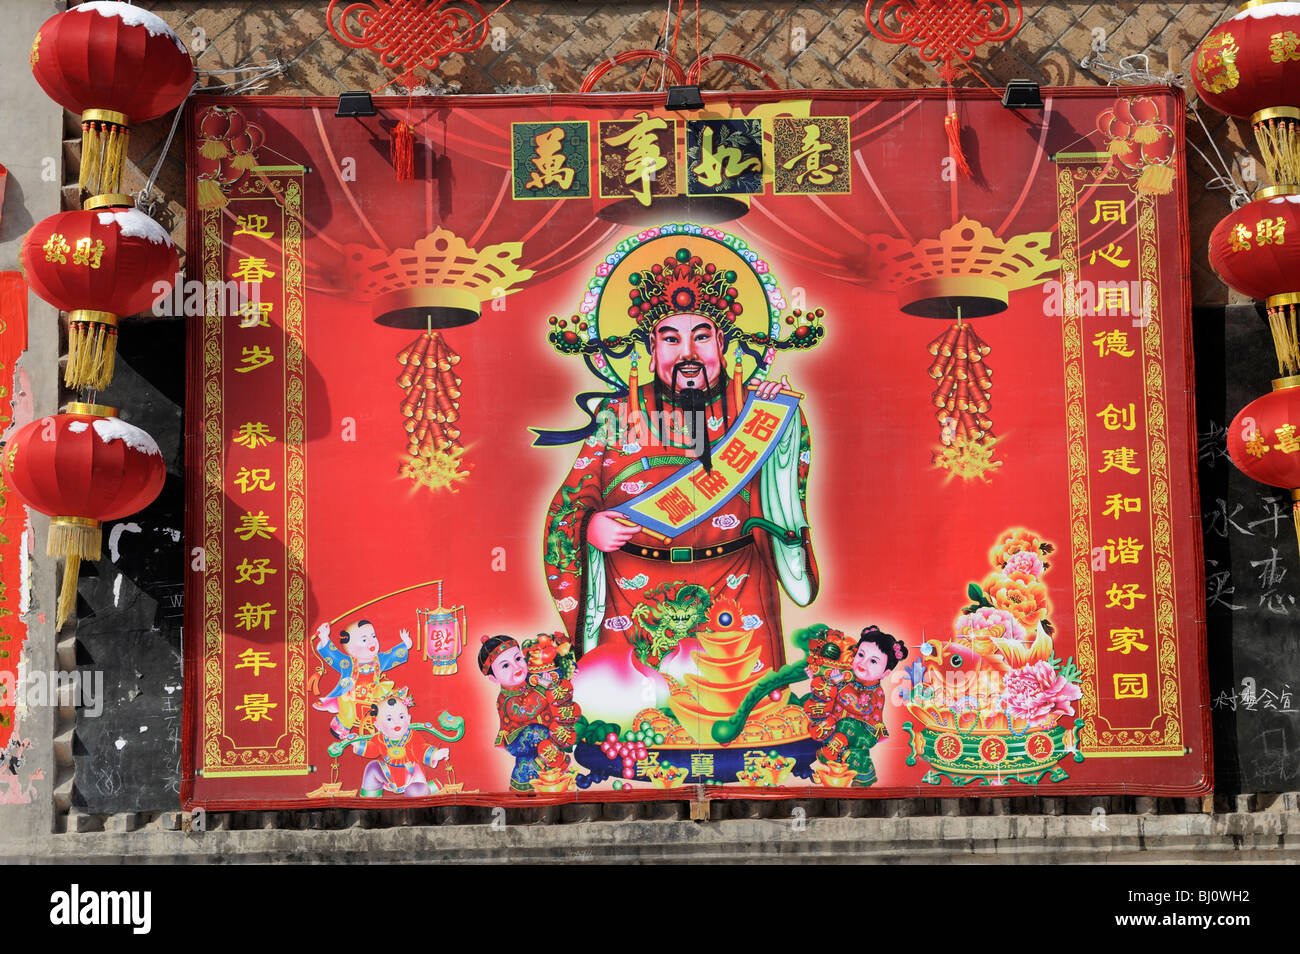 Una pintura del dios de la riqueza de la provincia de Hebei, China. 01-Mar-2010 Foto de stock